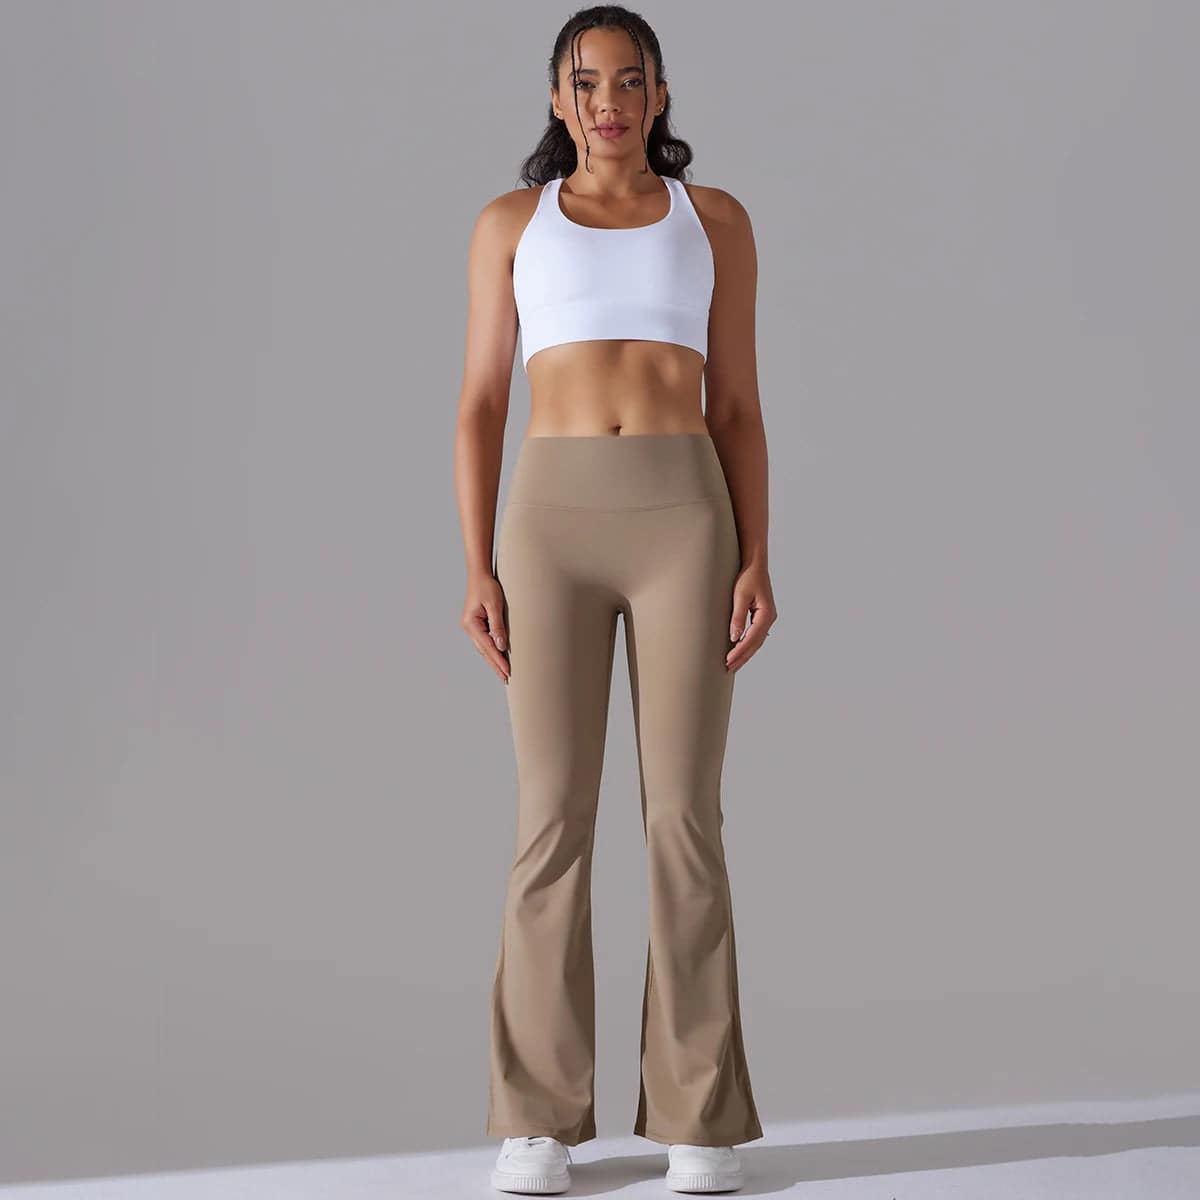 Flare Yoga Pants - Haileys Gymwear